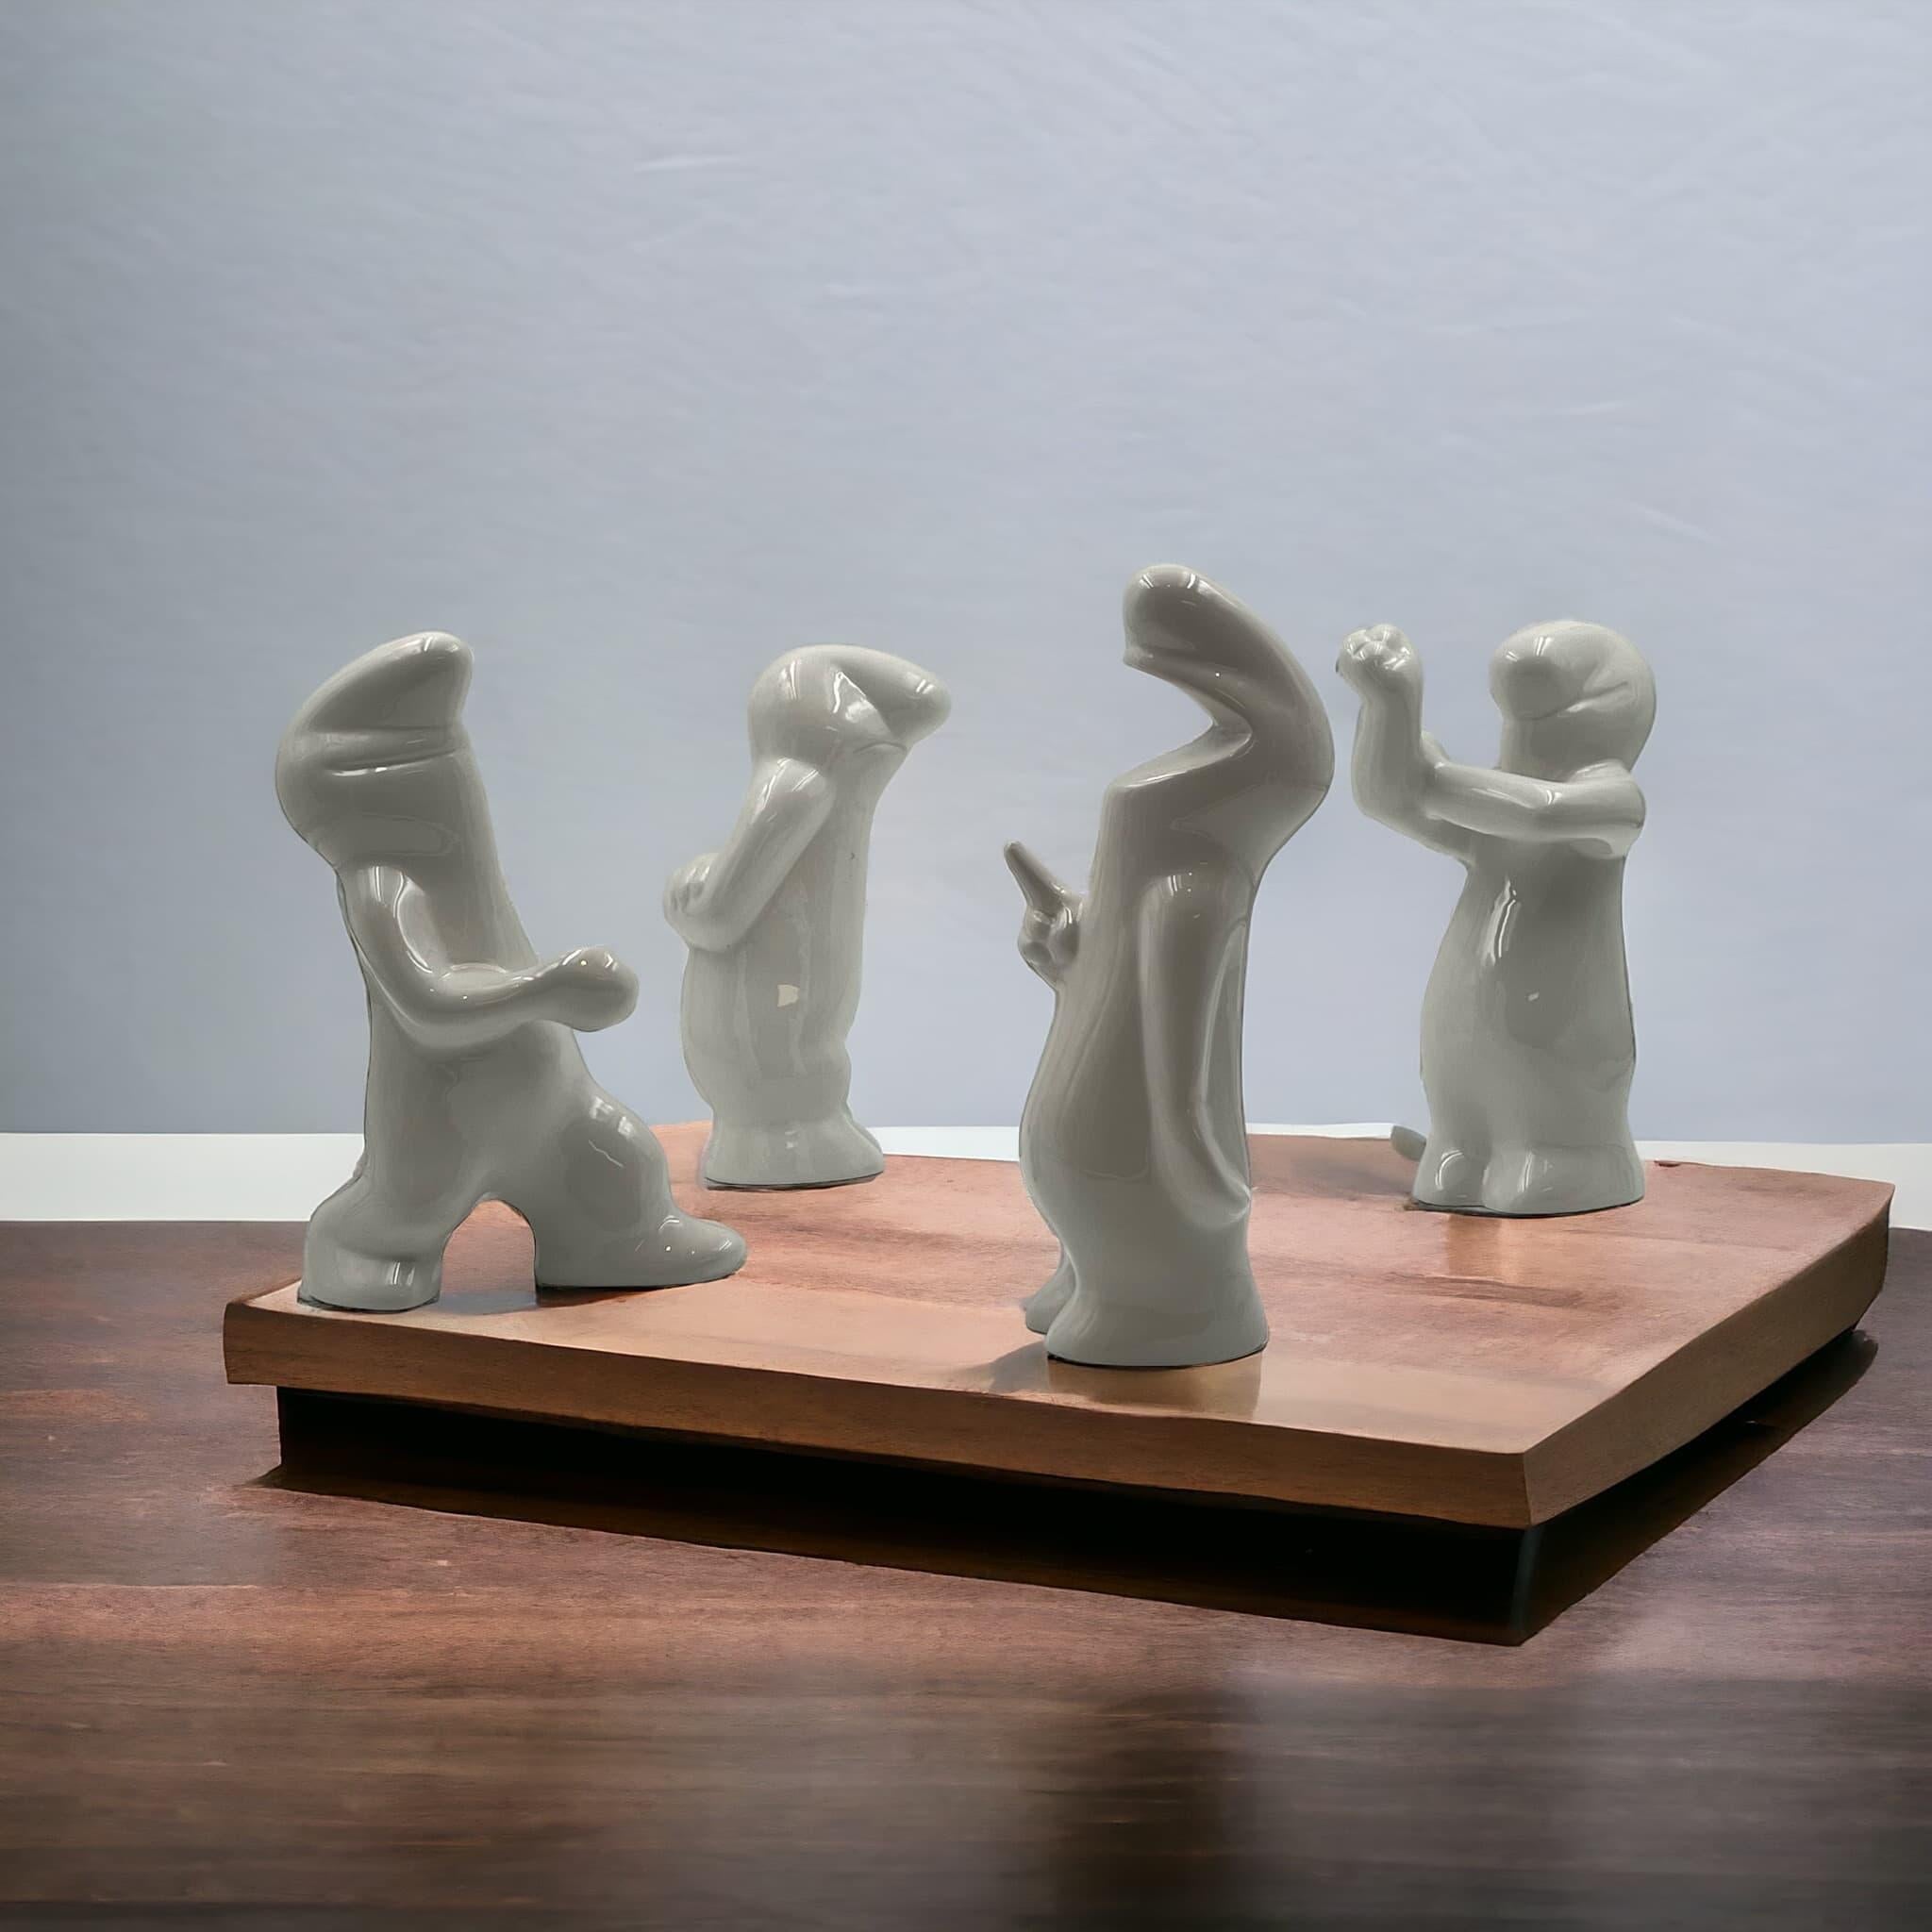 Osvaldo Cavandoli 'La Linea' - Pop Art 1960s - Set of Four Ceramic Figurines 5